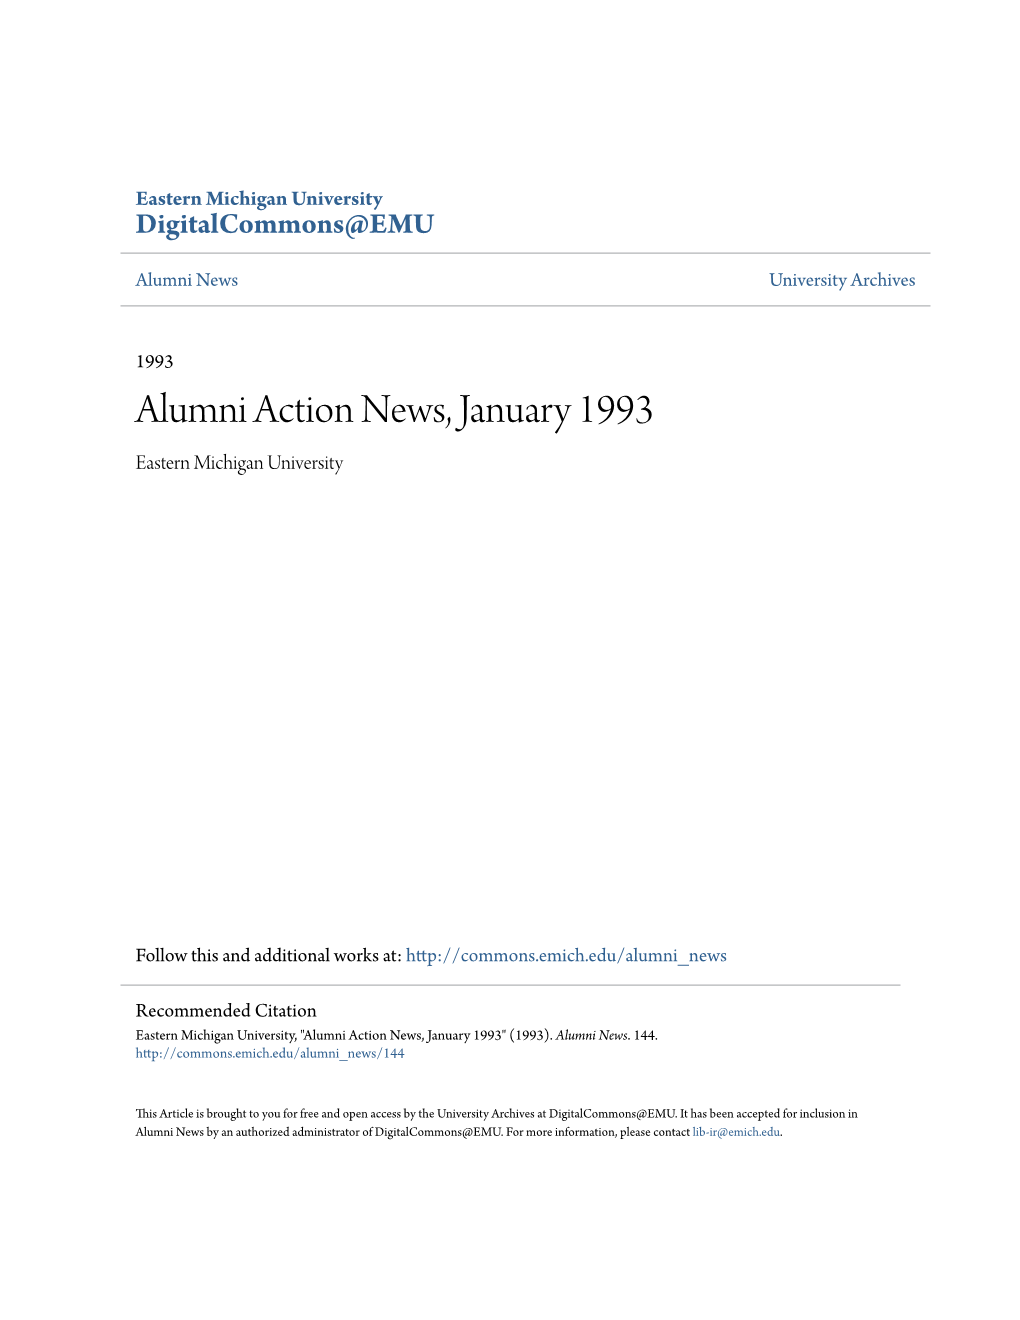 Alumni Action News, January 1993 Eastern Michigan University